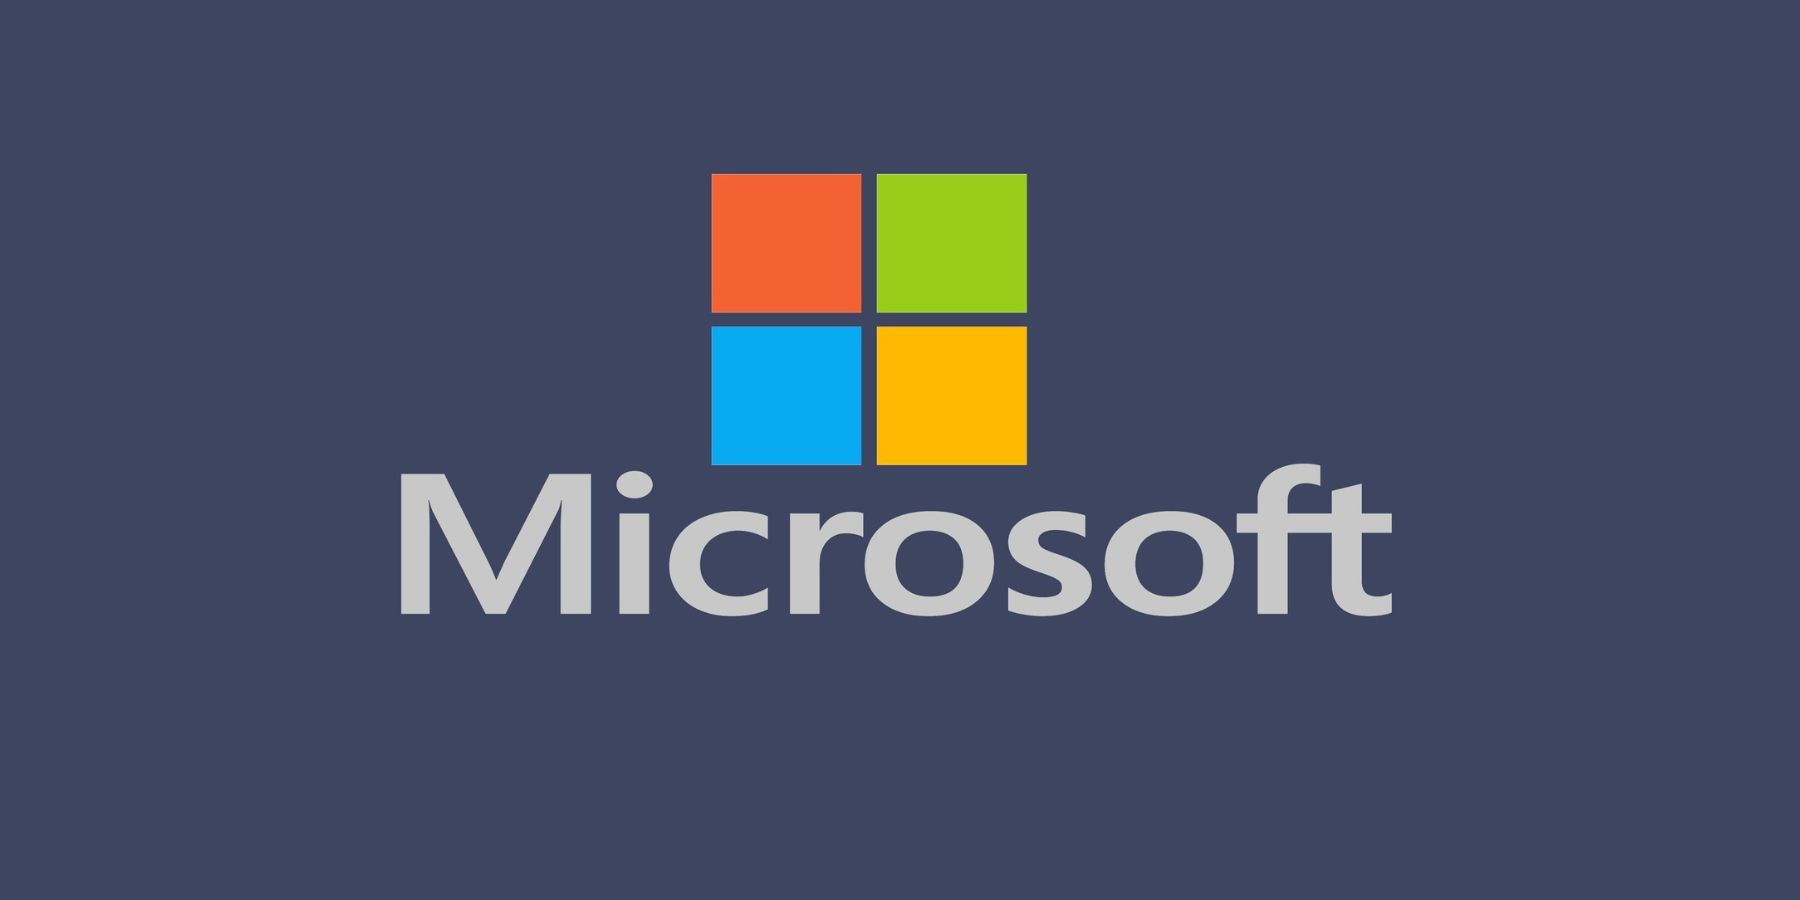 Microsoft title and logo